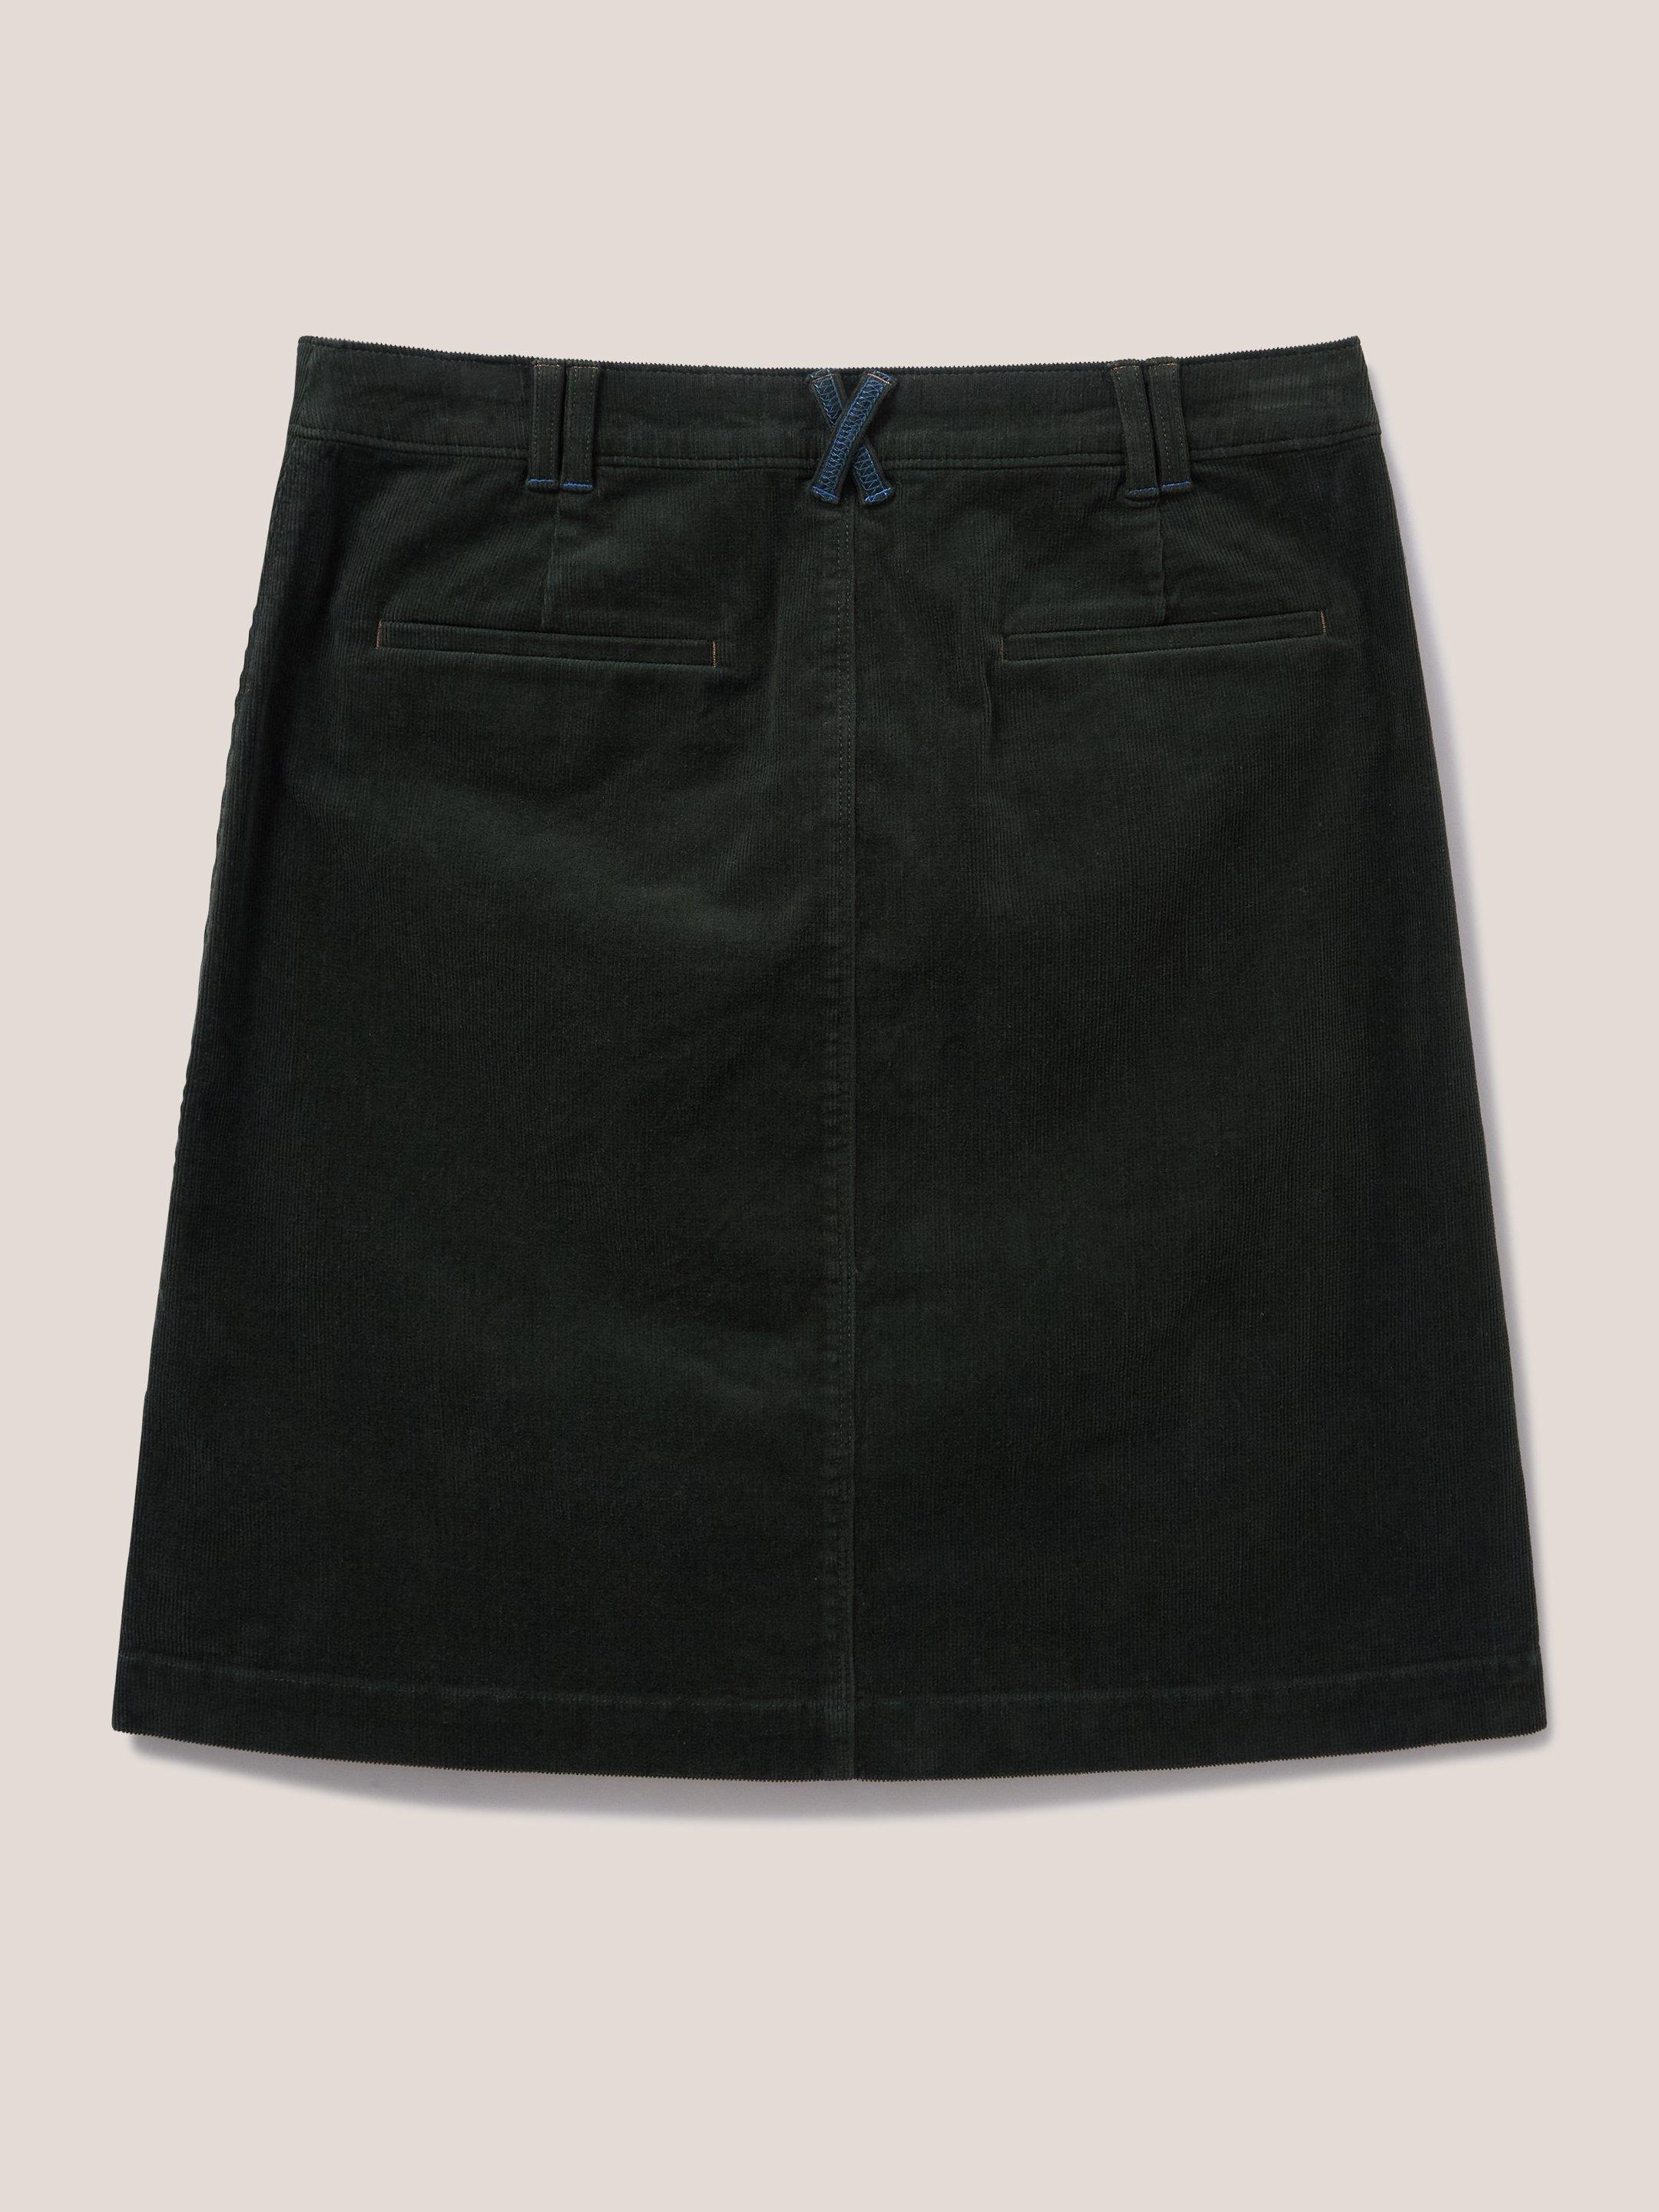 Melody Organic Cord Skirt in KHAKI GRN - FLAT BACK